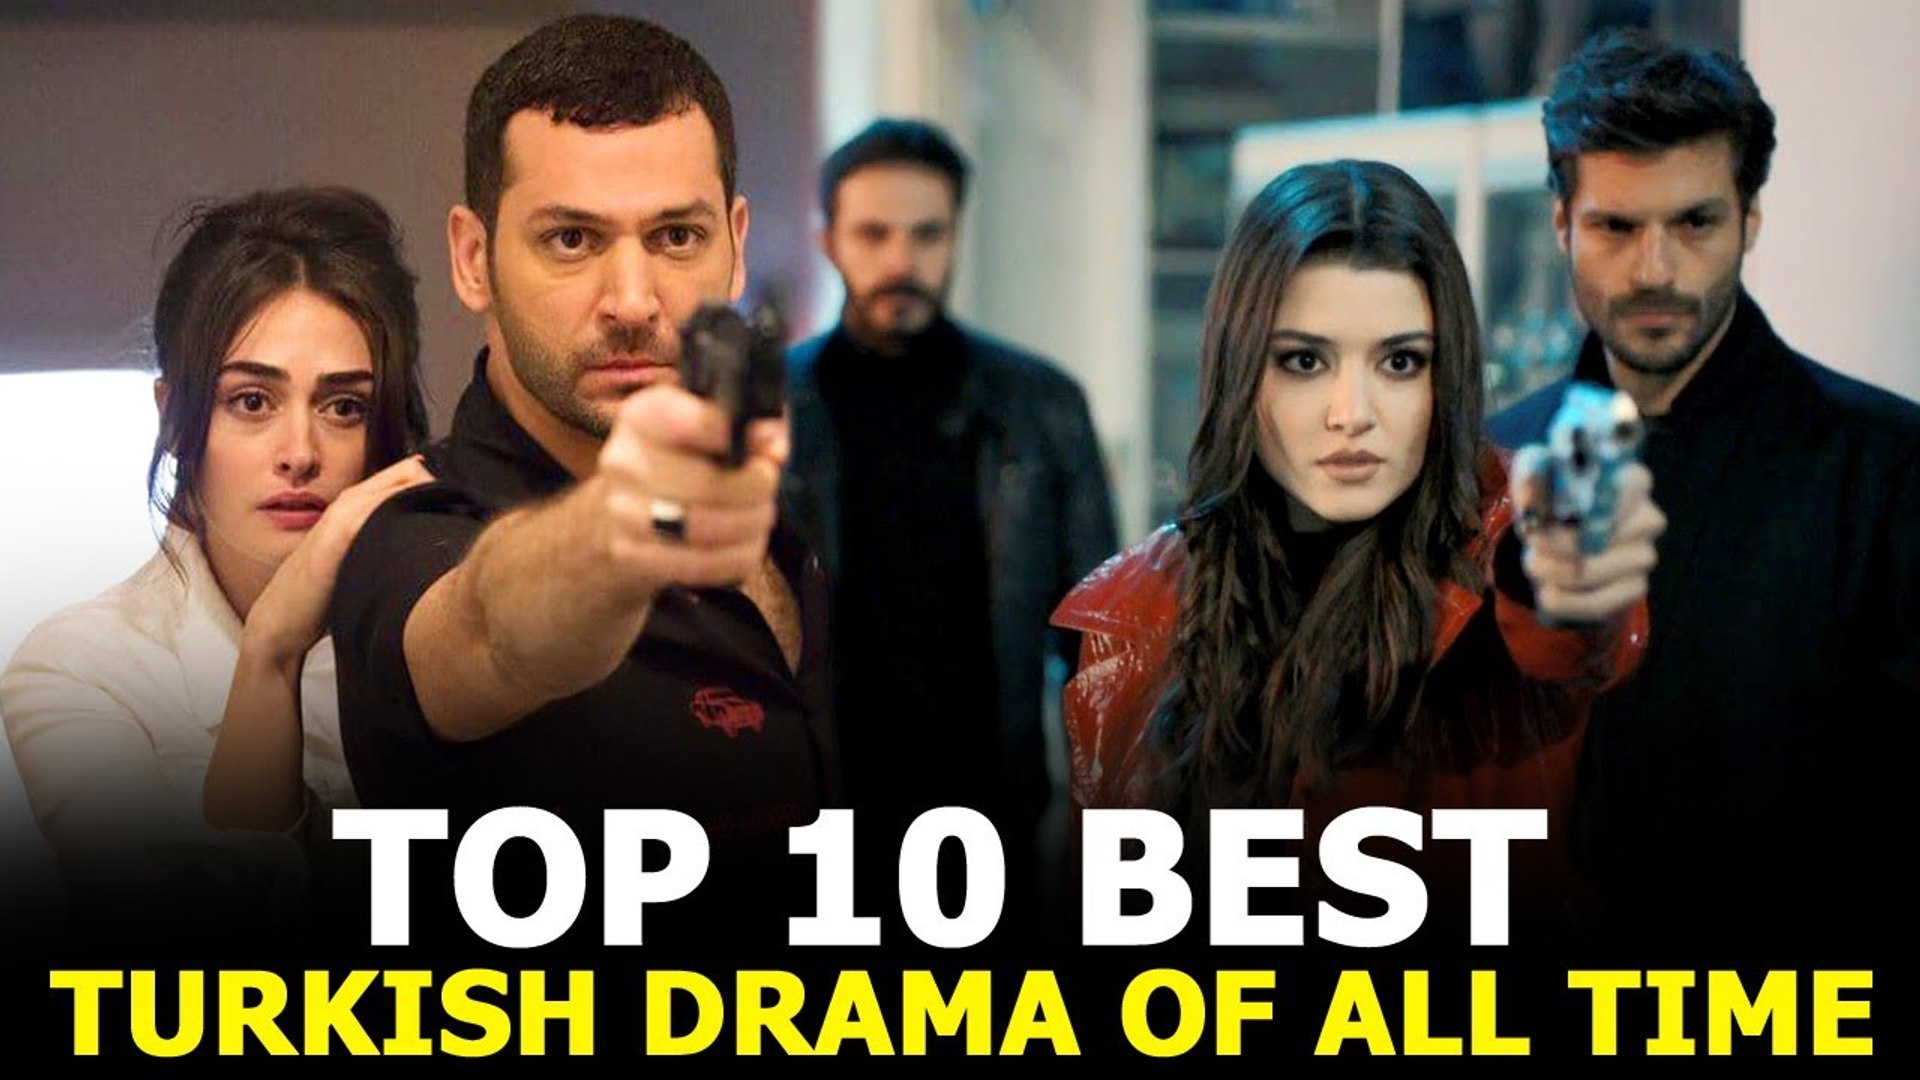 letvægt telegram ude af drift Top 10 Best Mafia & Gangsters Turkish Drama Series of All Time - Best  Turkish Drama 2021 - video Dailymotion